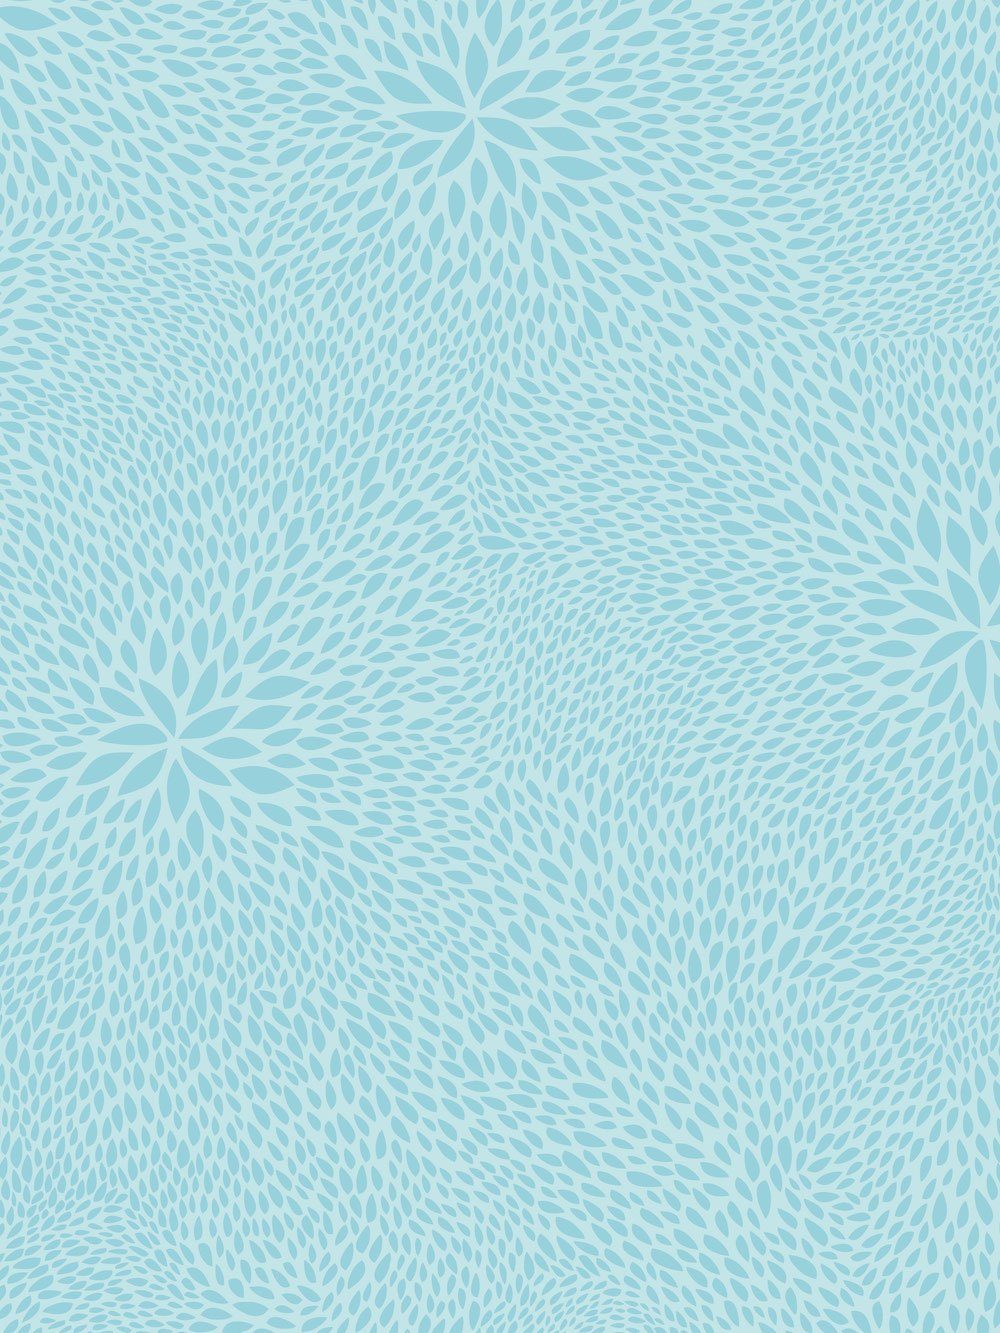 hellblau Zeichenpapier Décopatch-Papier H-Erzmade 701 Blütenblätter Muster